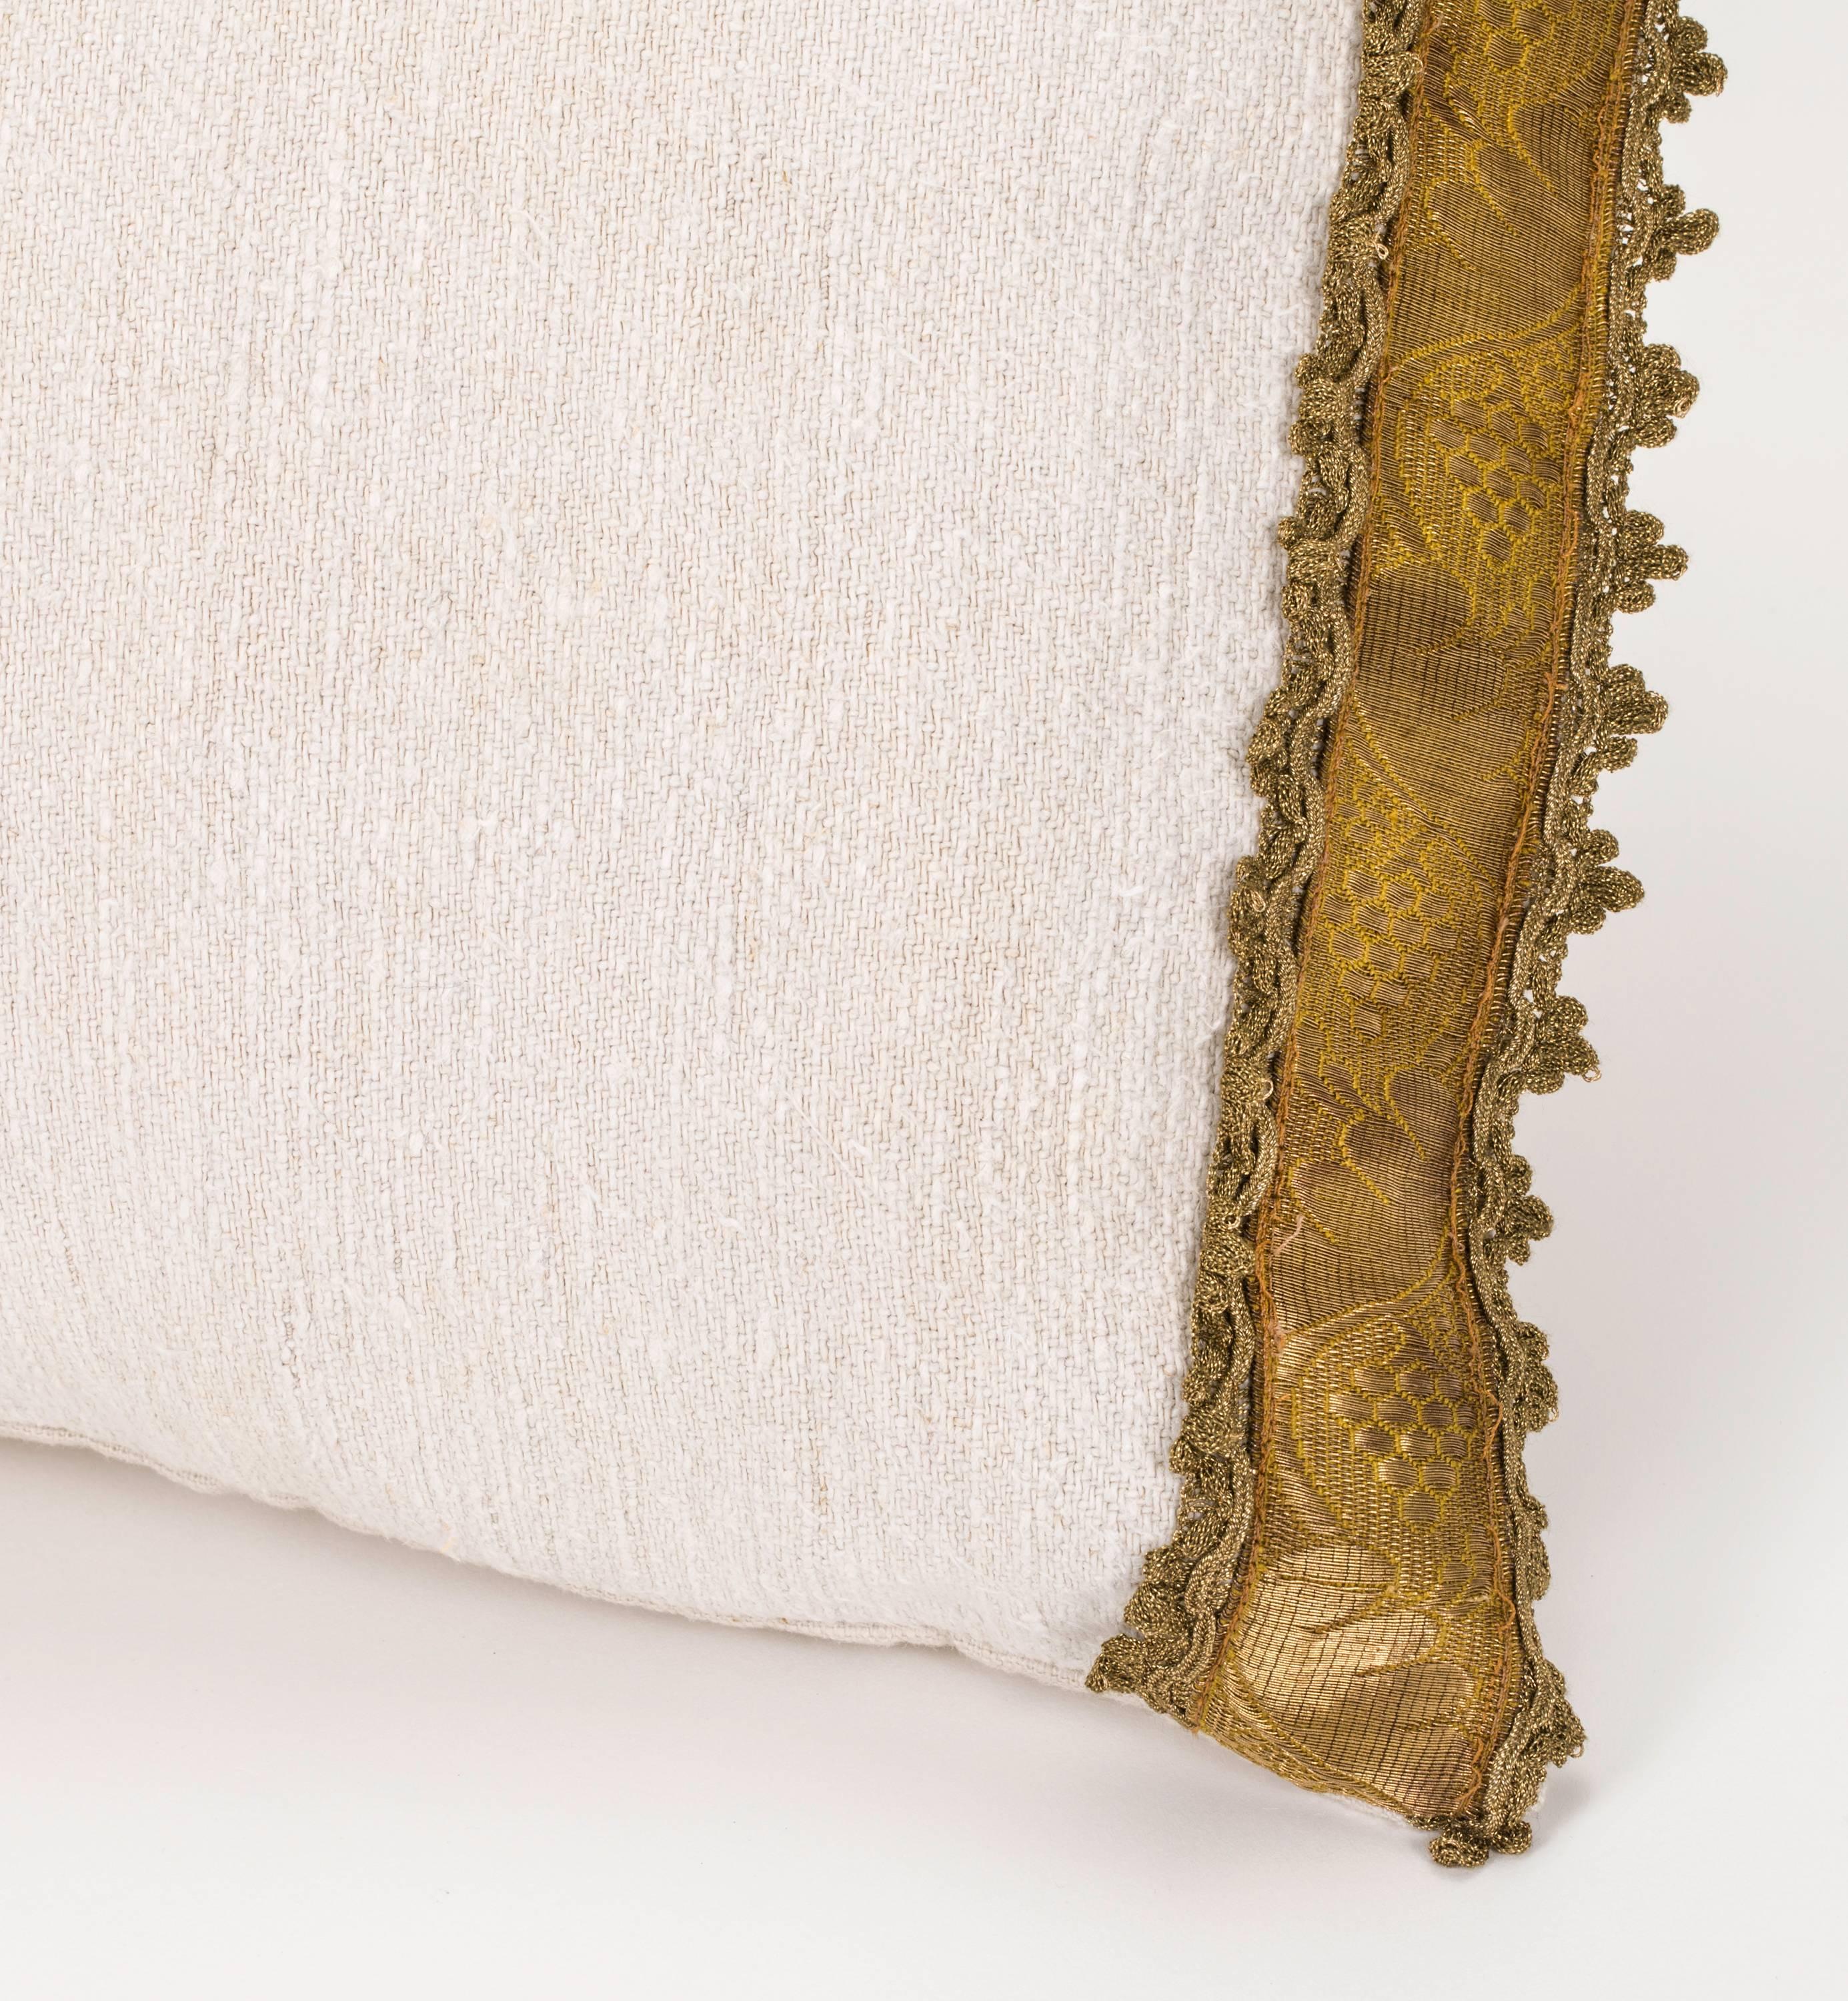 Antique Metallic Gold Thread Fleur-de-Lis Appliqué Pillow 2